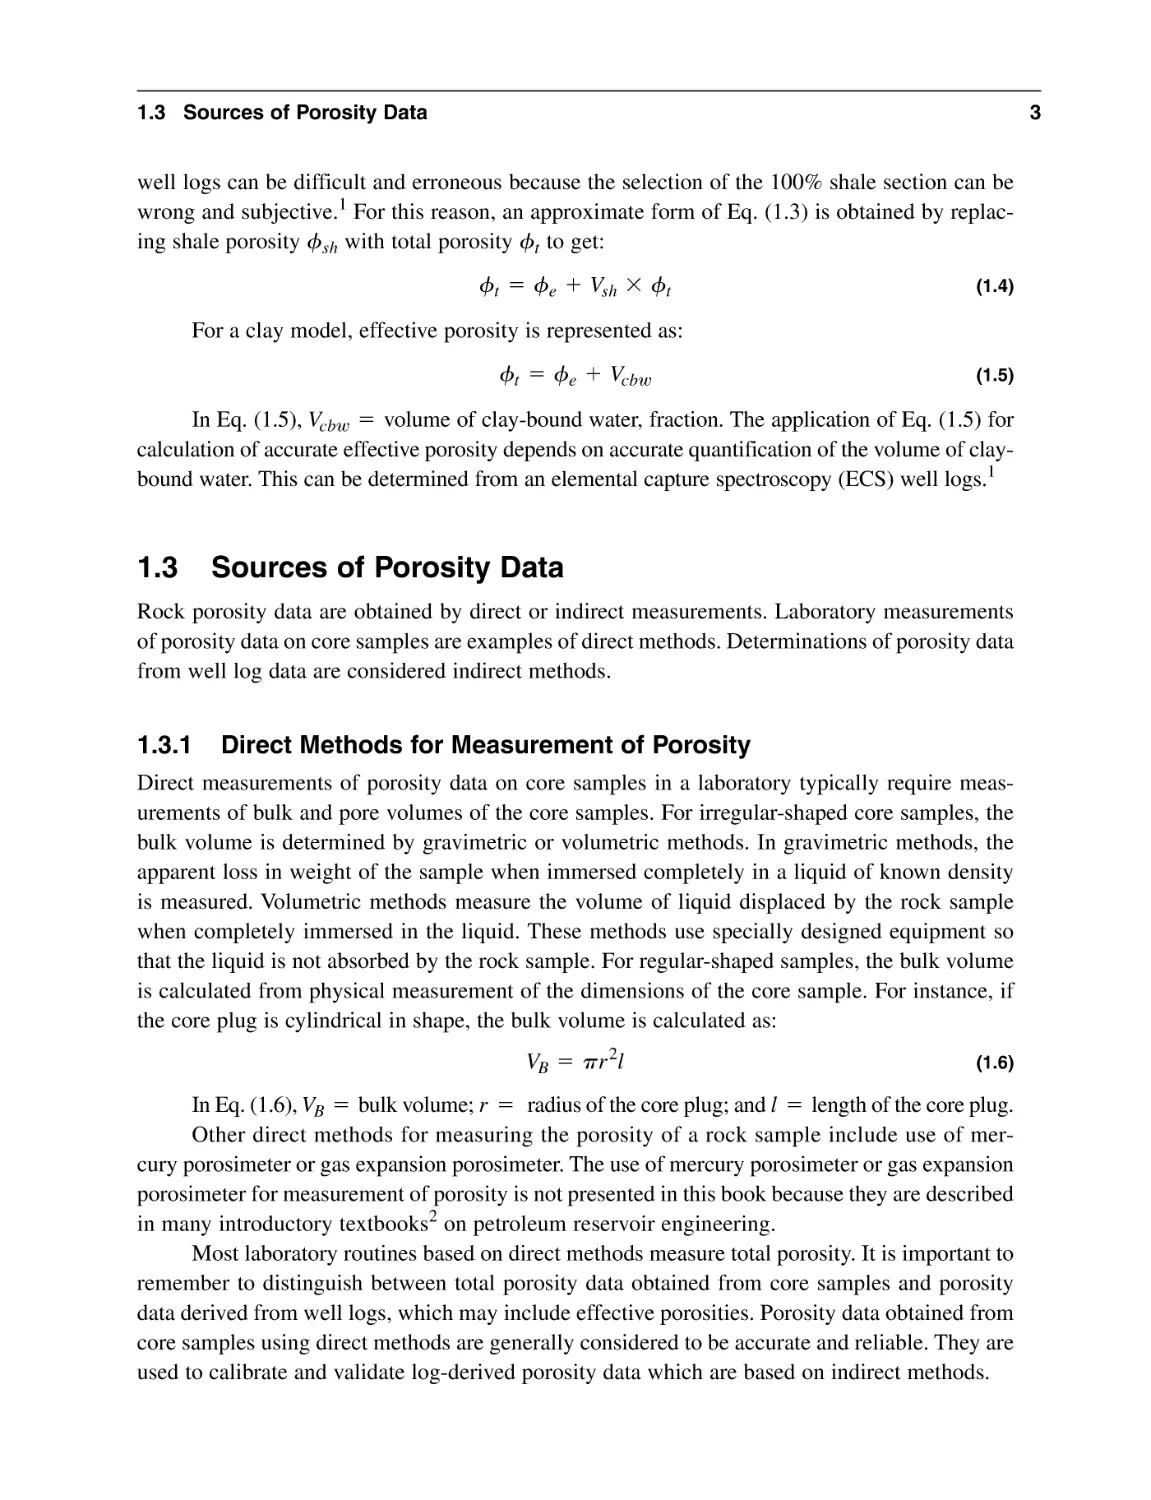 1.3 Sources of Porosity Data
1.3.1 Direct Methods for Measurement of Porosity